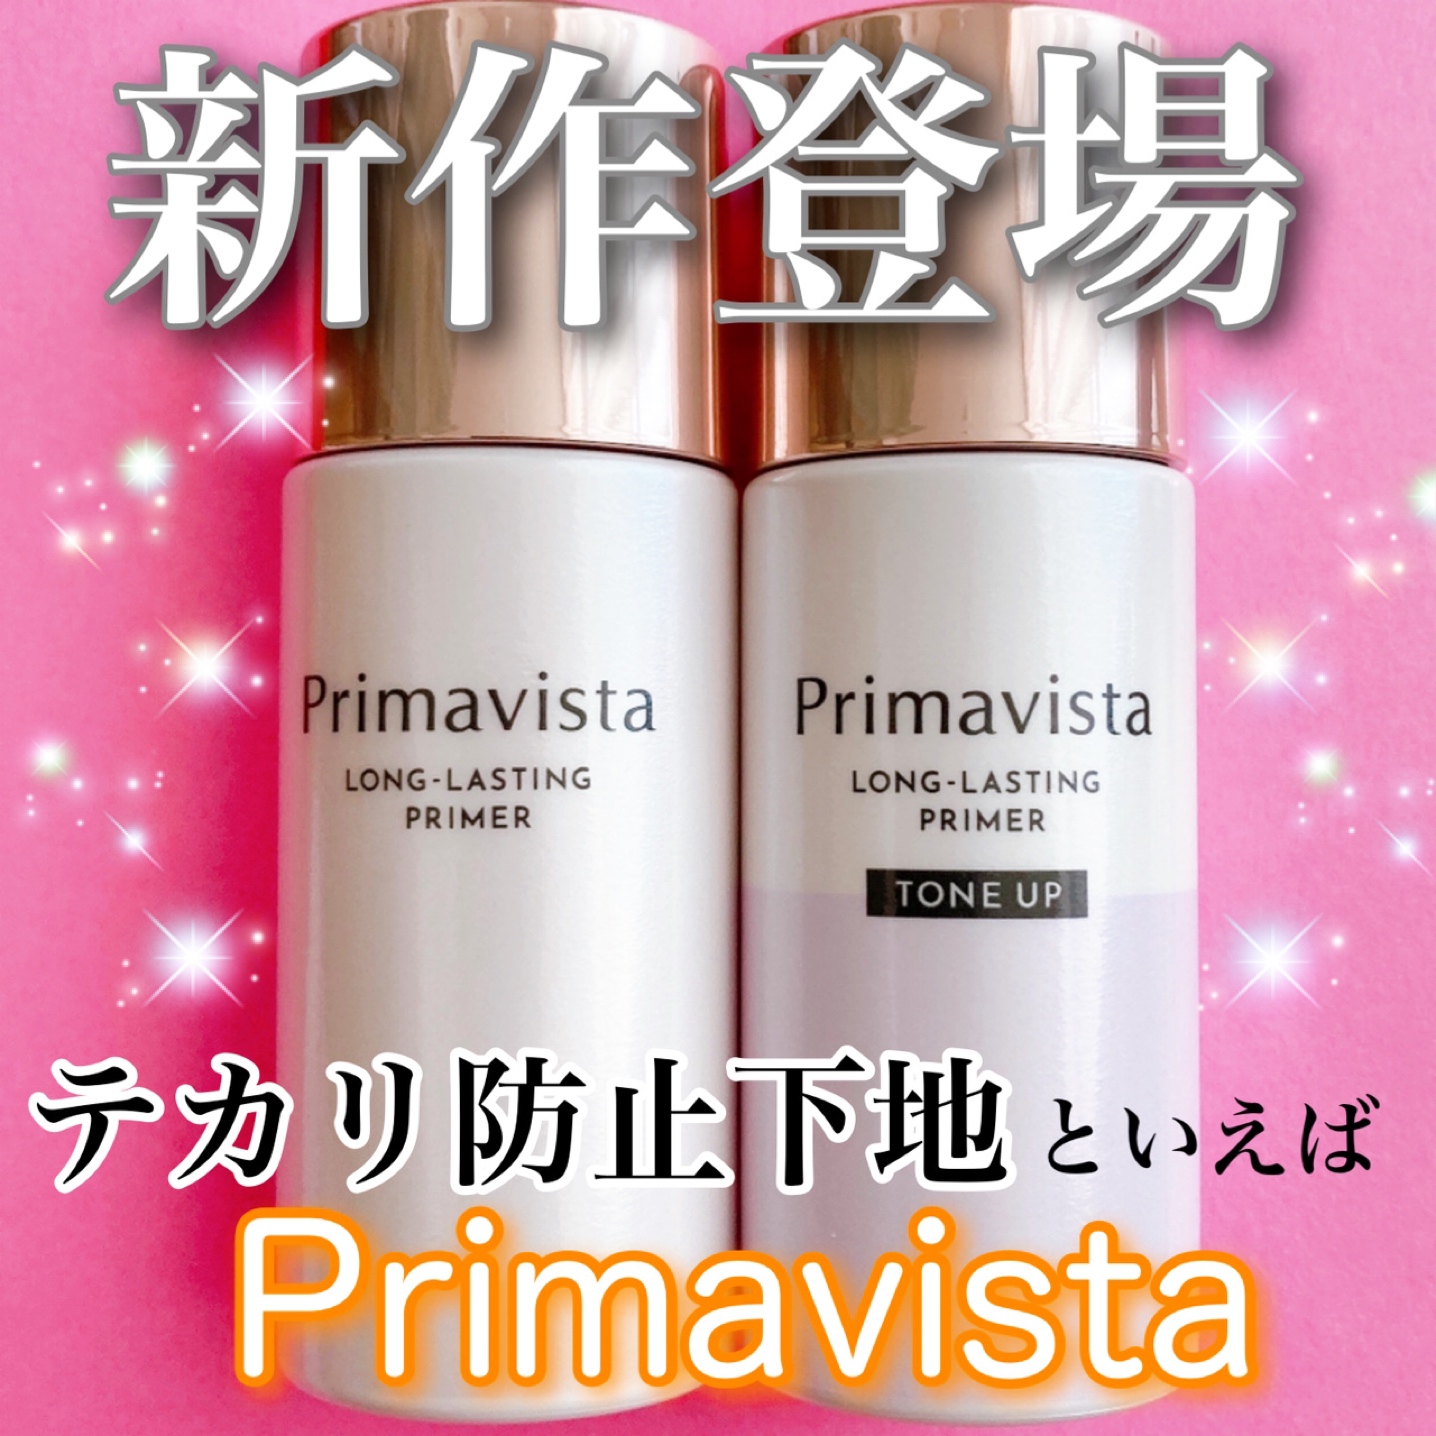 SOFINA Primavista(ソフィーナ プリマヴィスタ) 皮脂くずれ防止 化粧下地の良い点・メリットに関するyunaさんの口コミ画像1